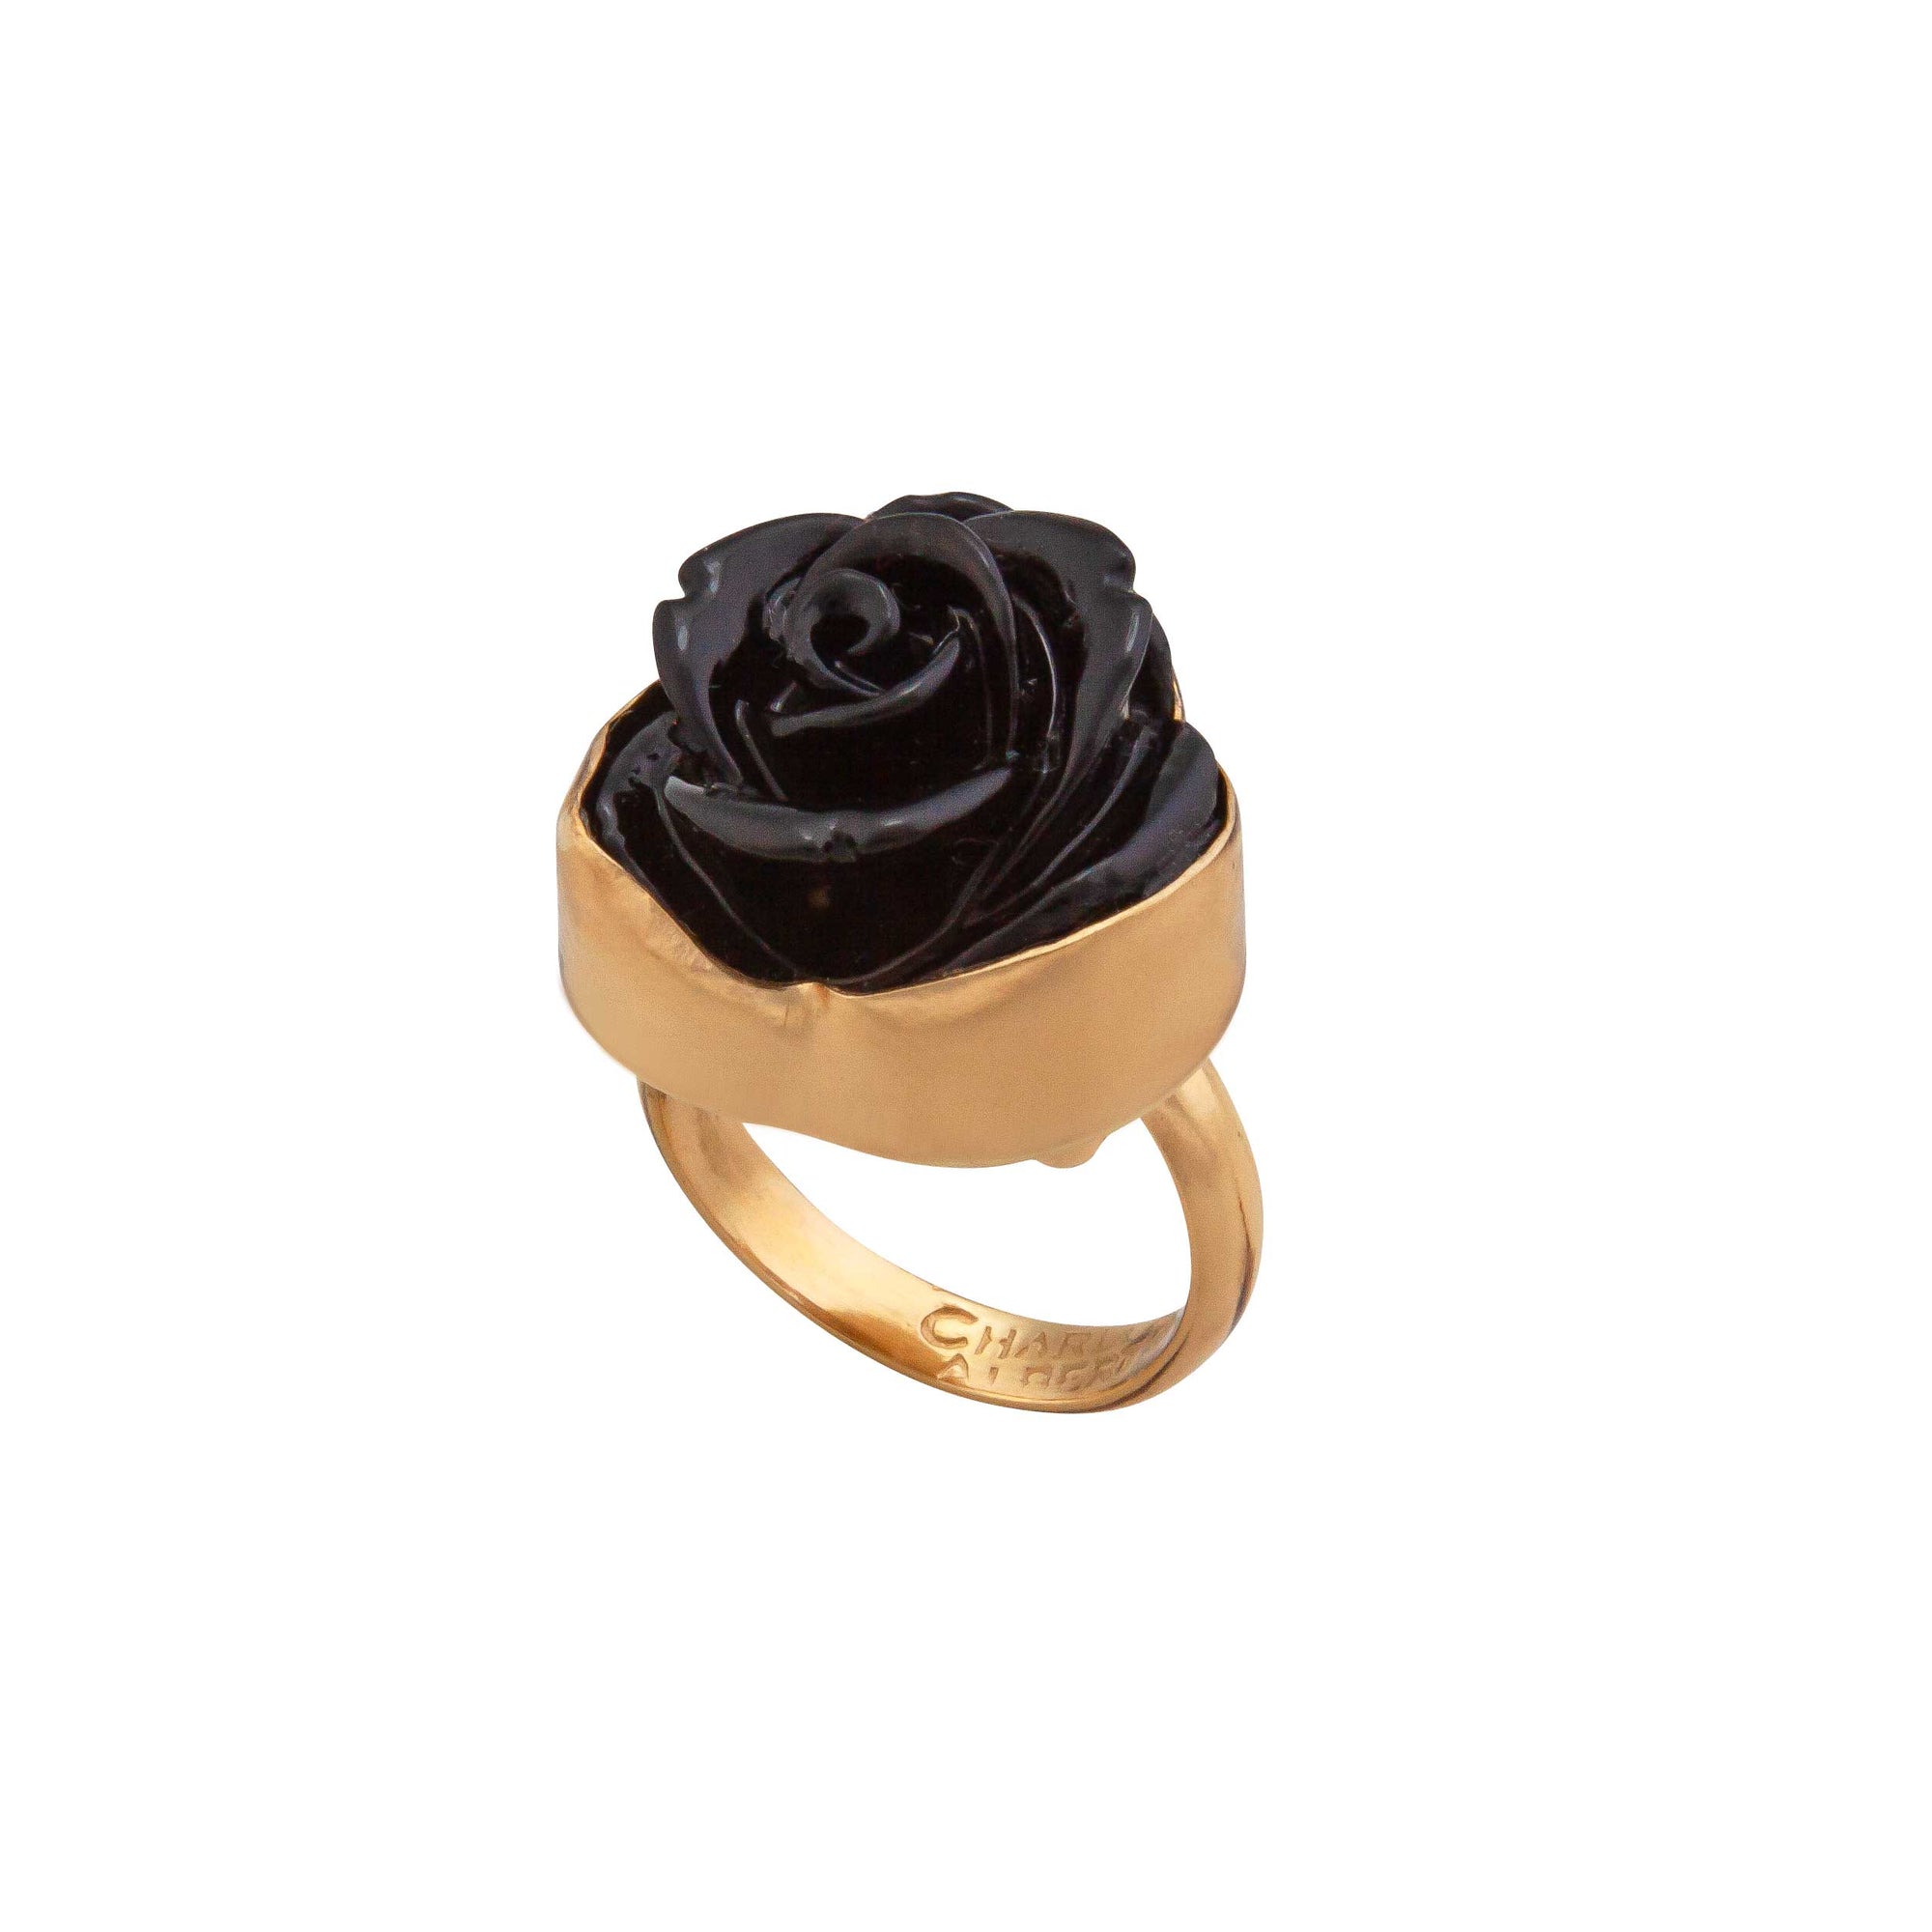 Alchemia Black Resin Rose Adjustable Ring - Charles Albert Jewelry